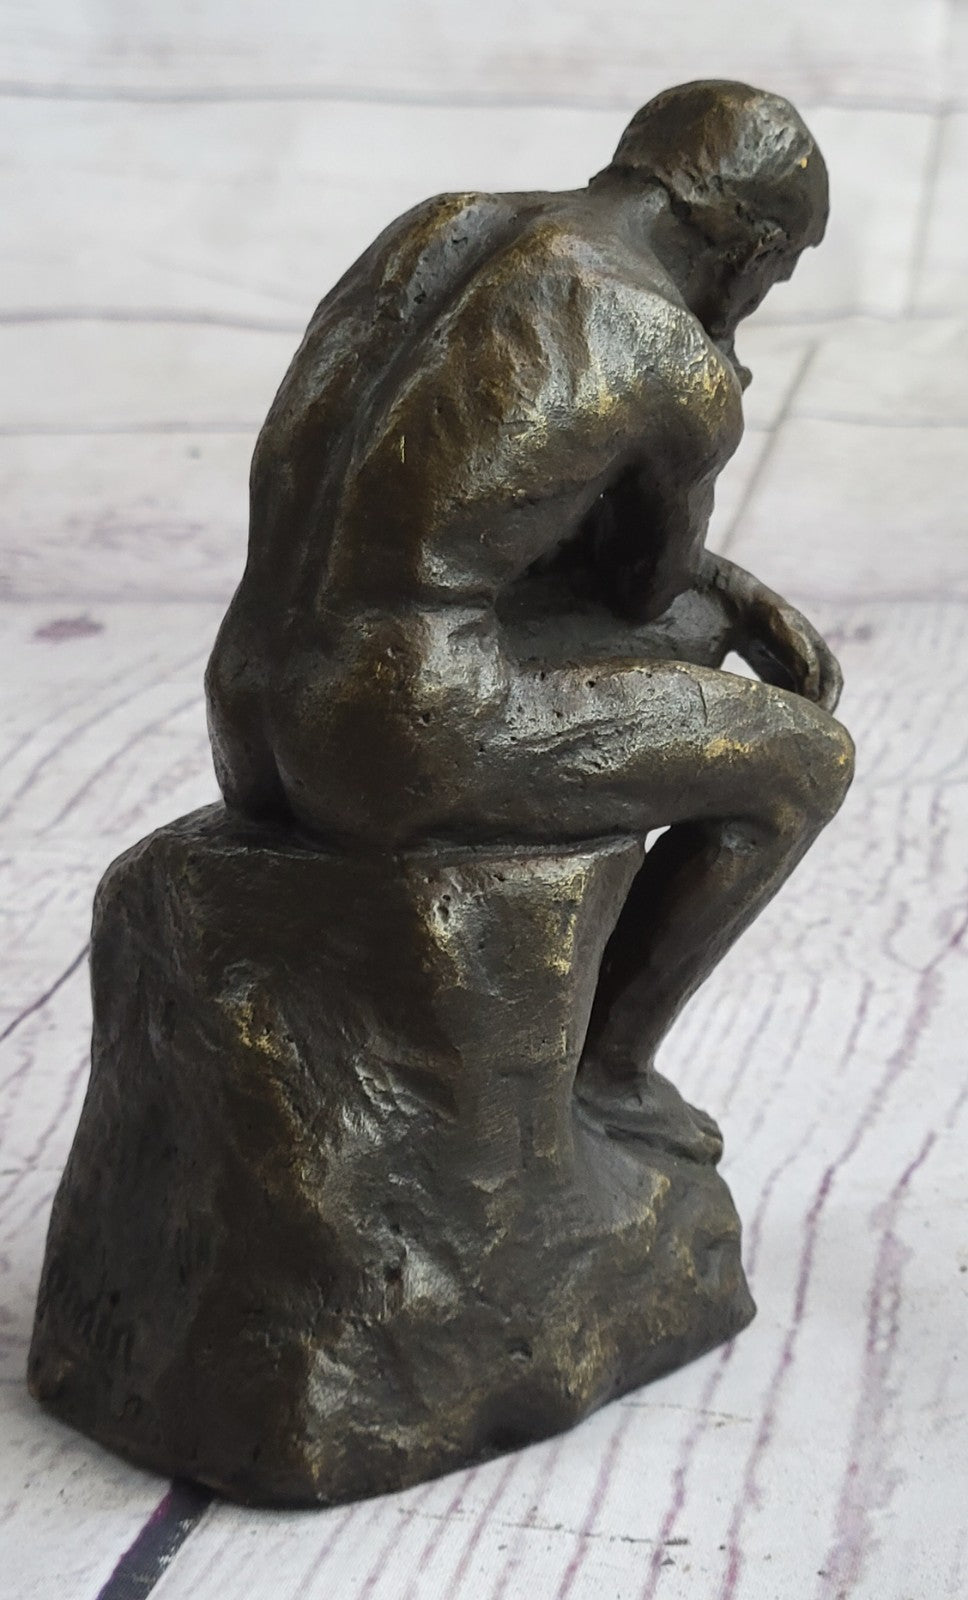 NEW THE THINKER by Rodin STATUE DARK BRONZE EUROPEAN ART SCULPTURE FIGURE SALE